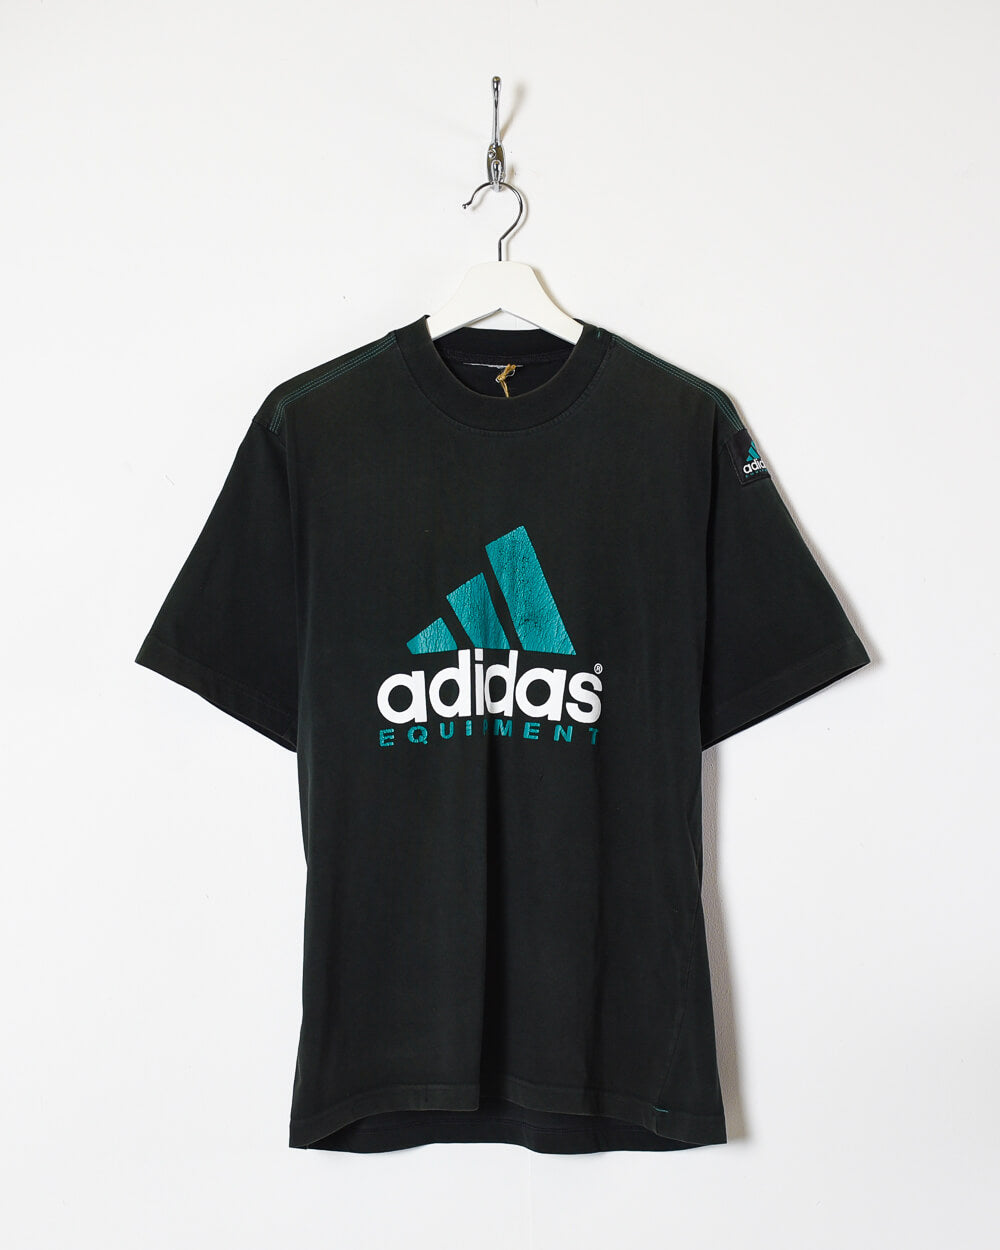 Black Adidas Equipment T-Shirt - Medium